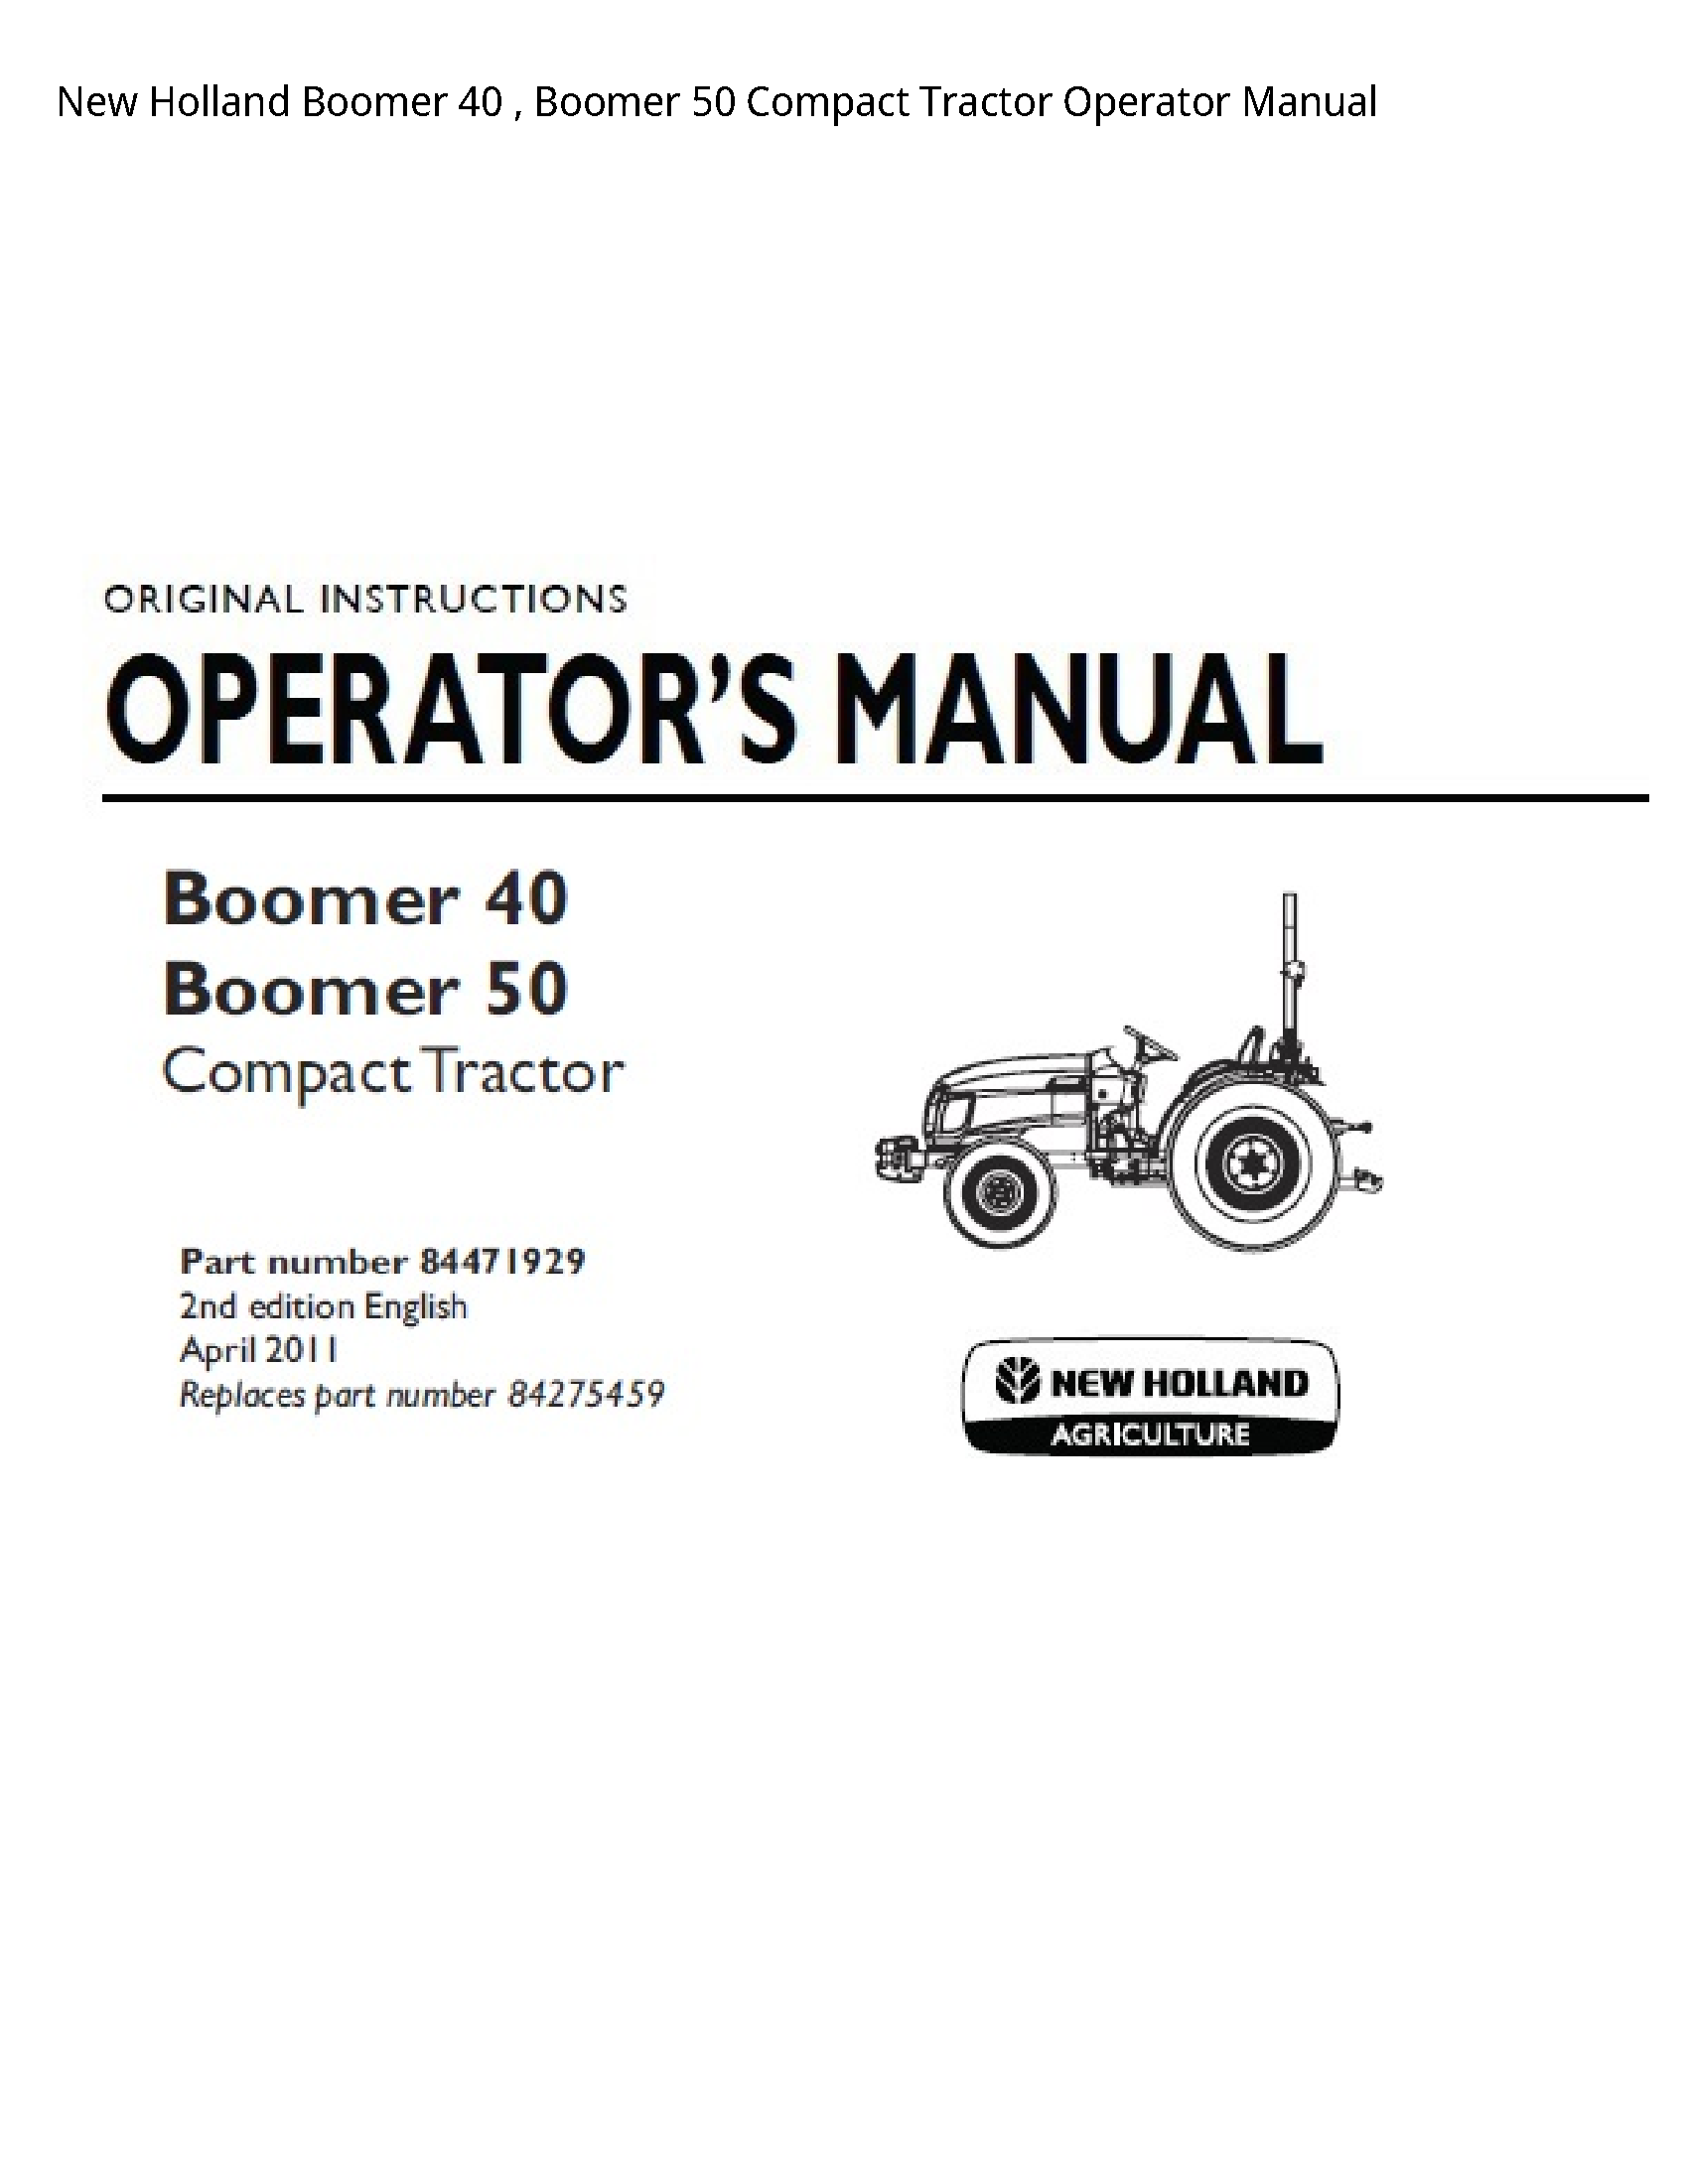 New Holland 40 Boomer Boomer Compact Tractor Operator manual